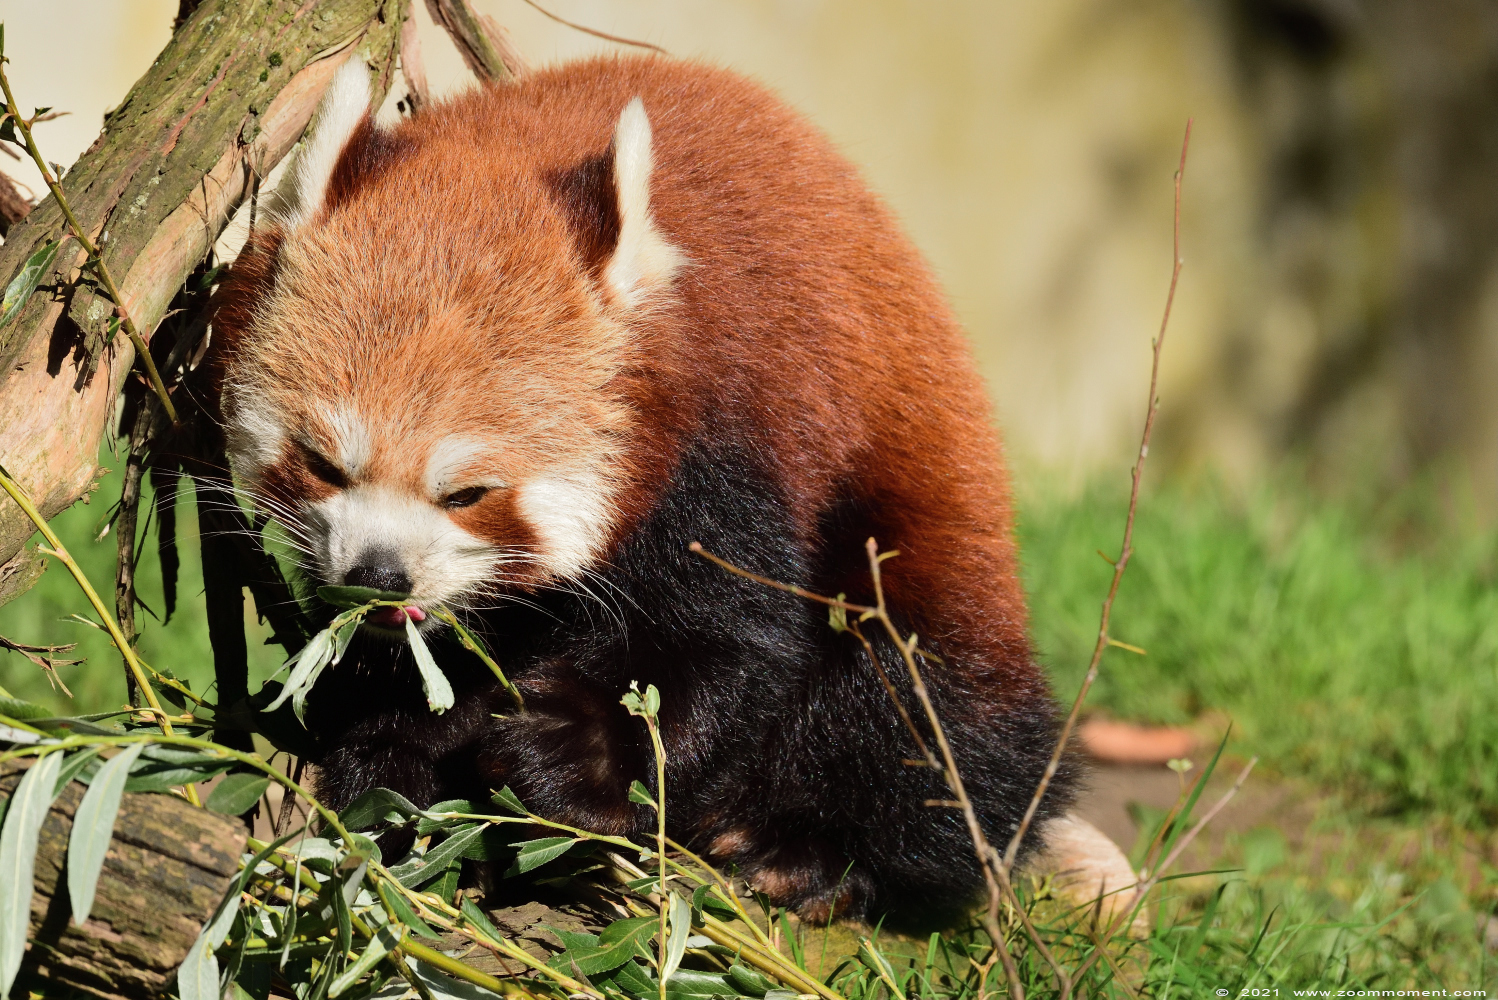 kleine of rode panda ( Ailurus fulgens ) lesser or red panda
Keywords: Planckendael Belgium kleine rode panda Ailurus fulgens lesser red panda